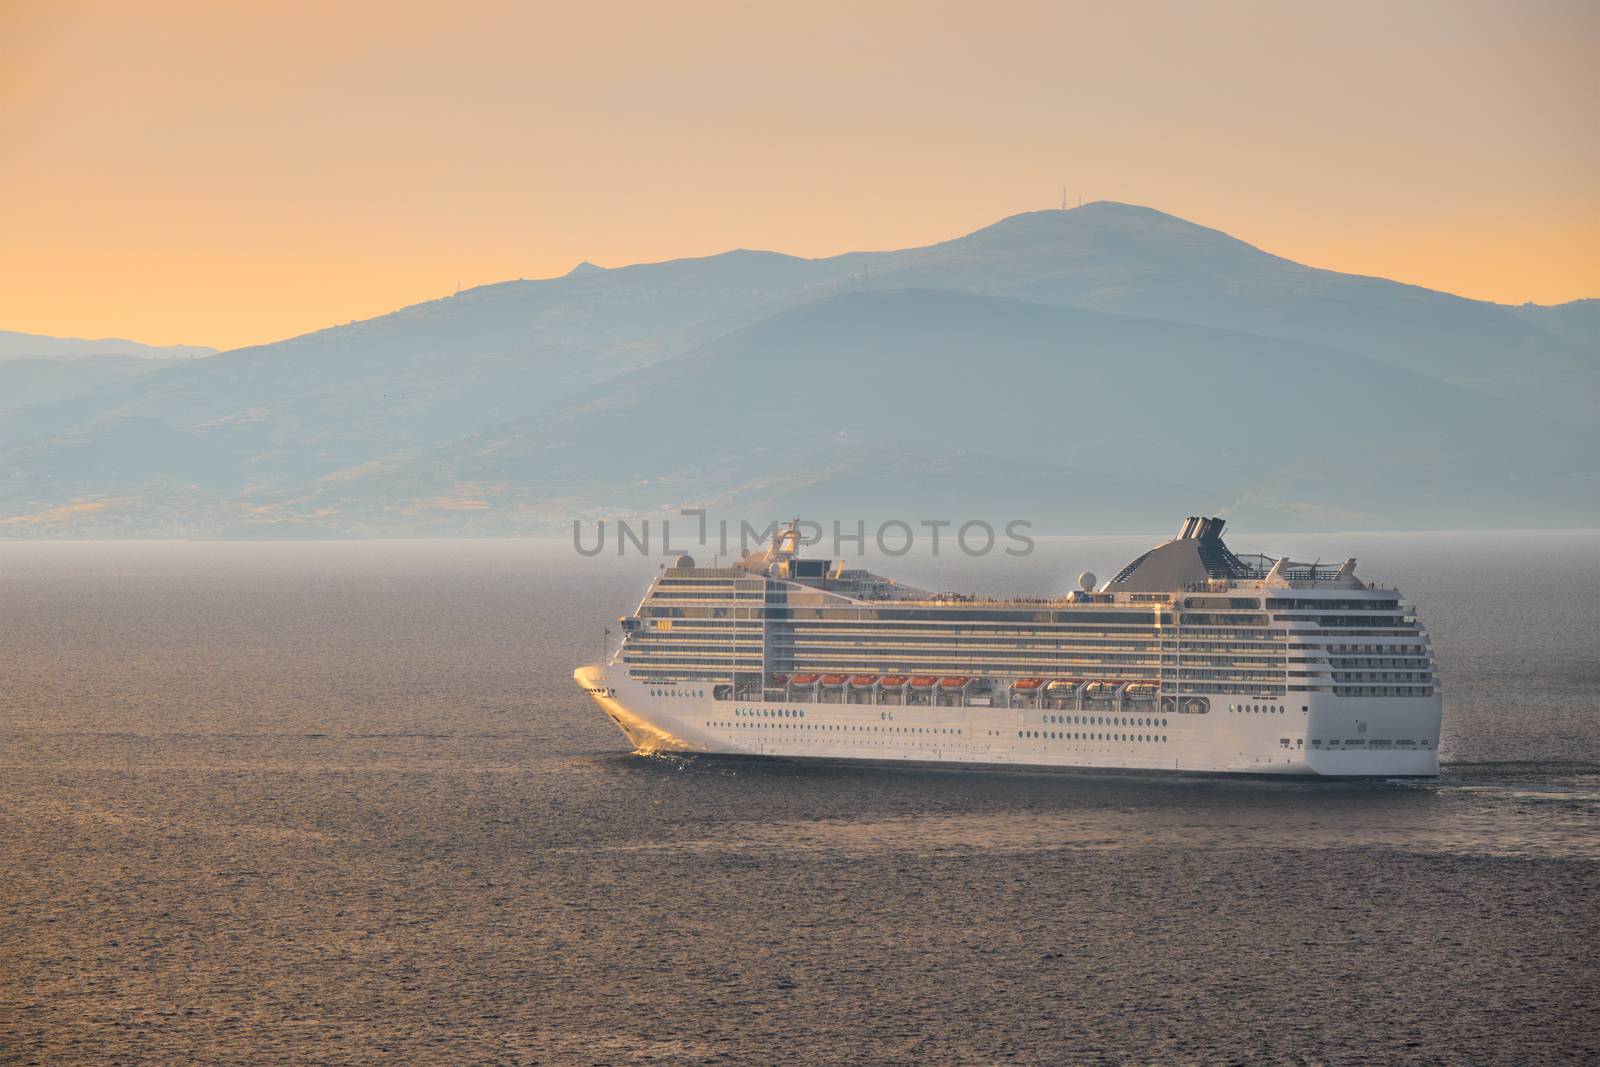 Cruise ship in Aegean sea on sunset by dimol